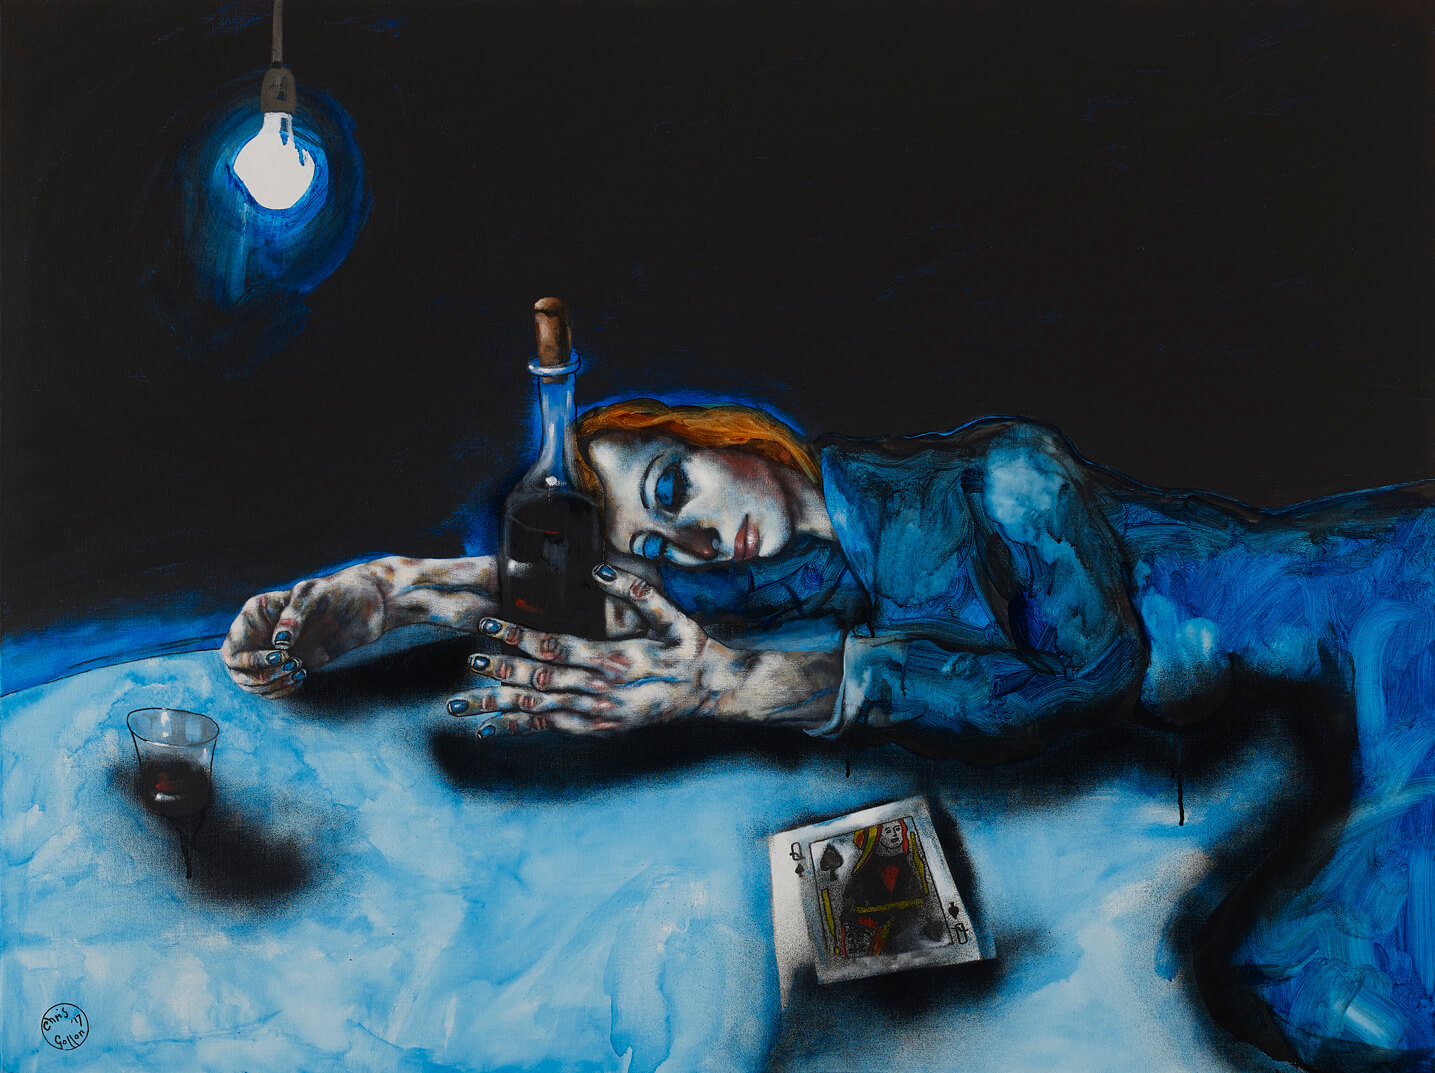 CHRIS GOLLON: Painting Towards the Light